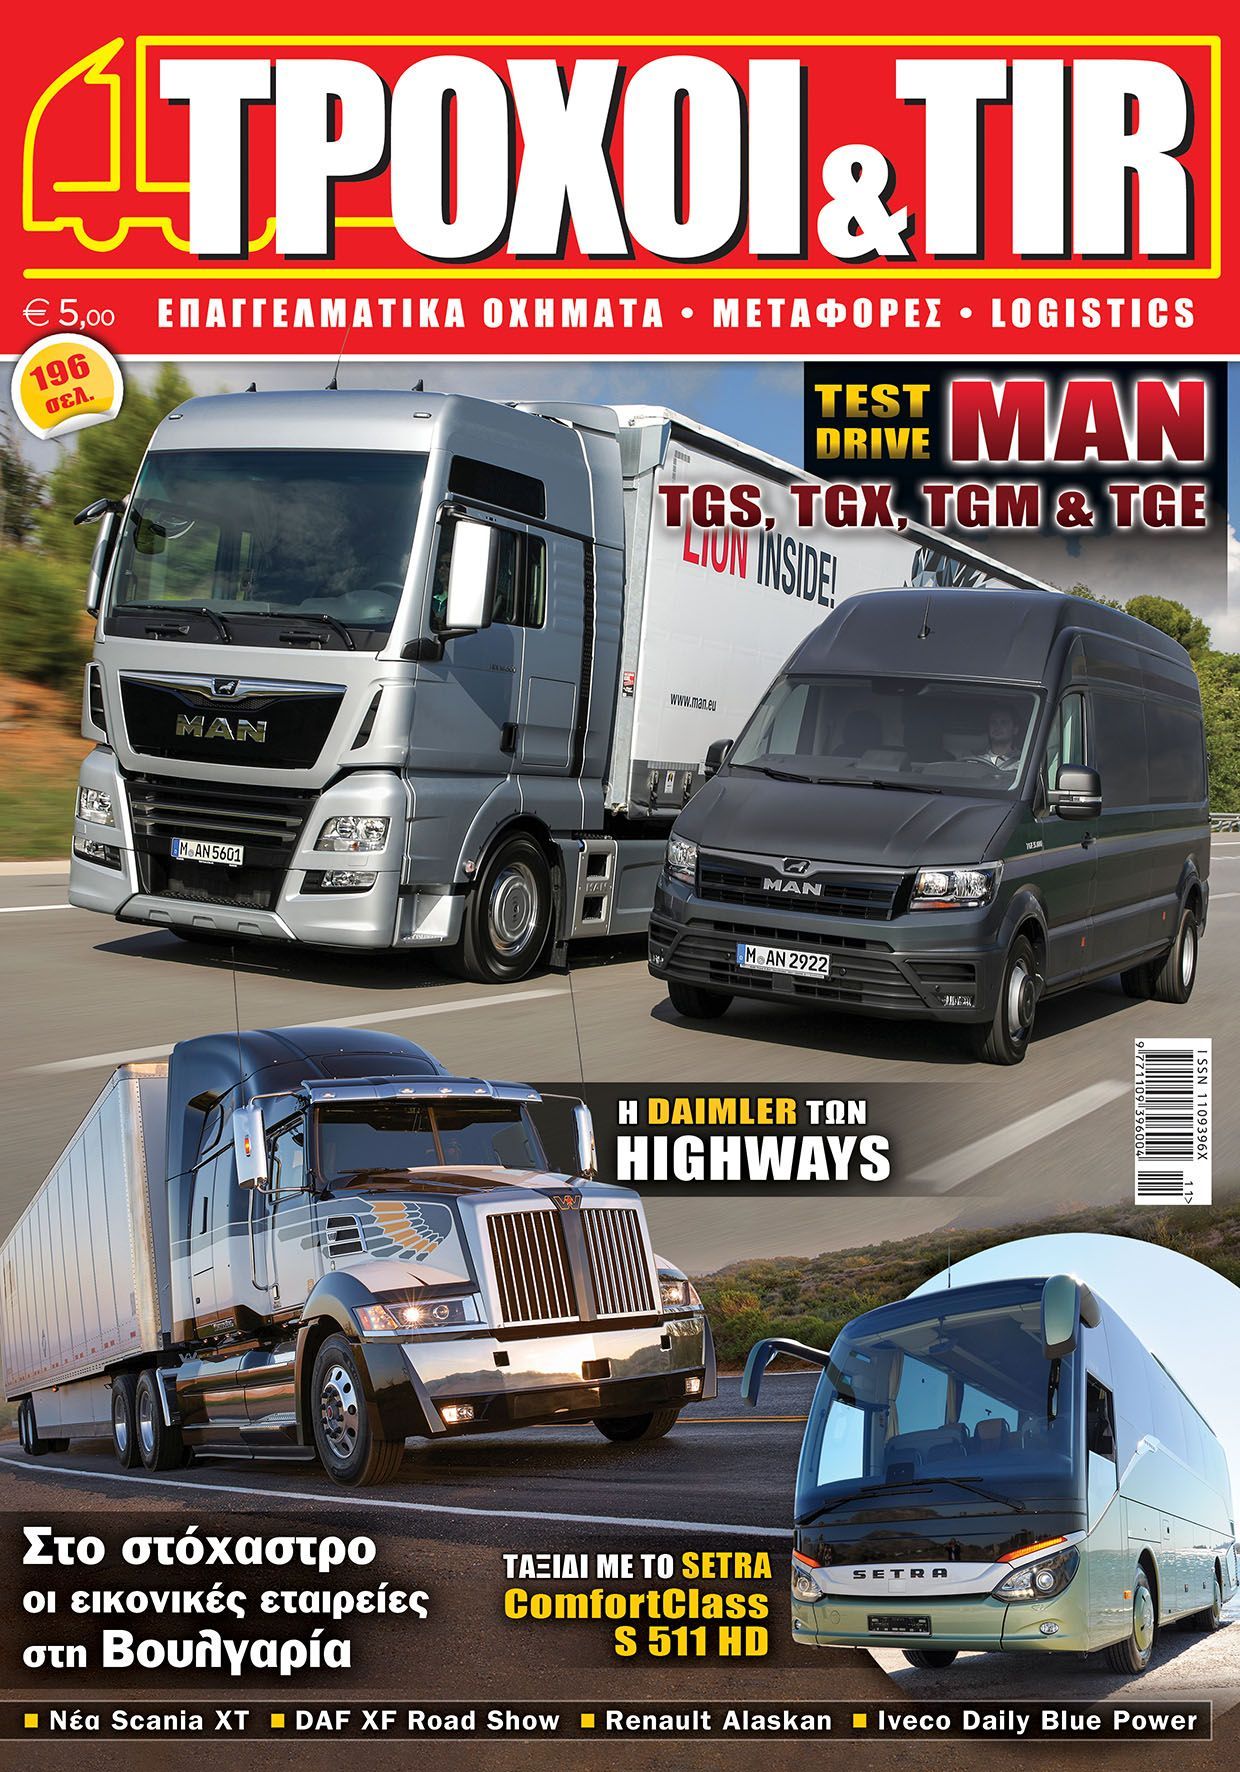 Troxoikaitir issue 355 november 2017 cover